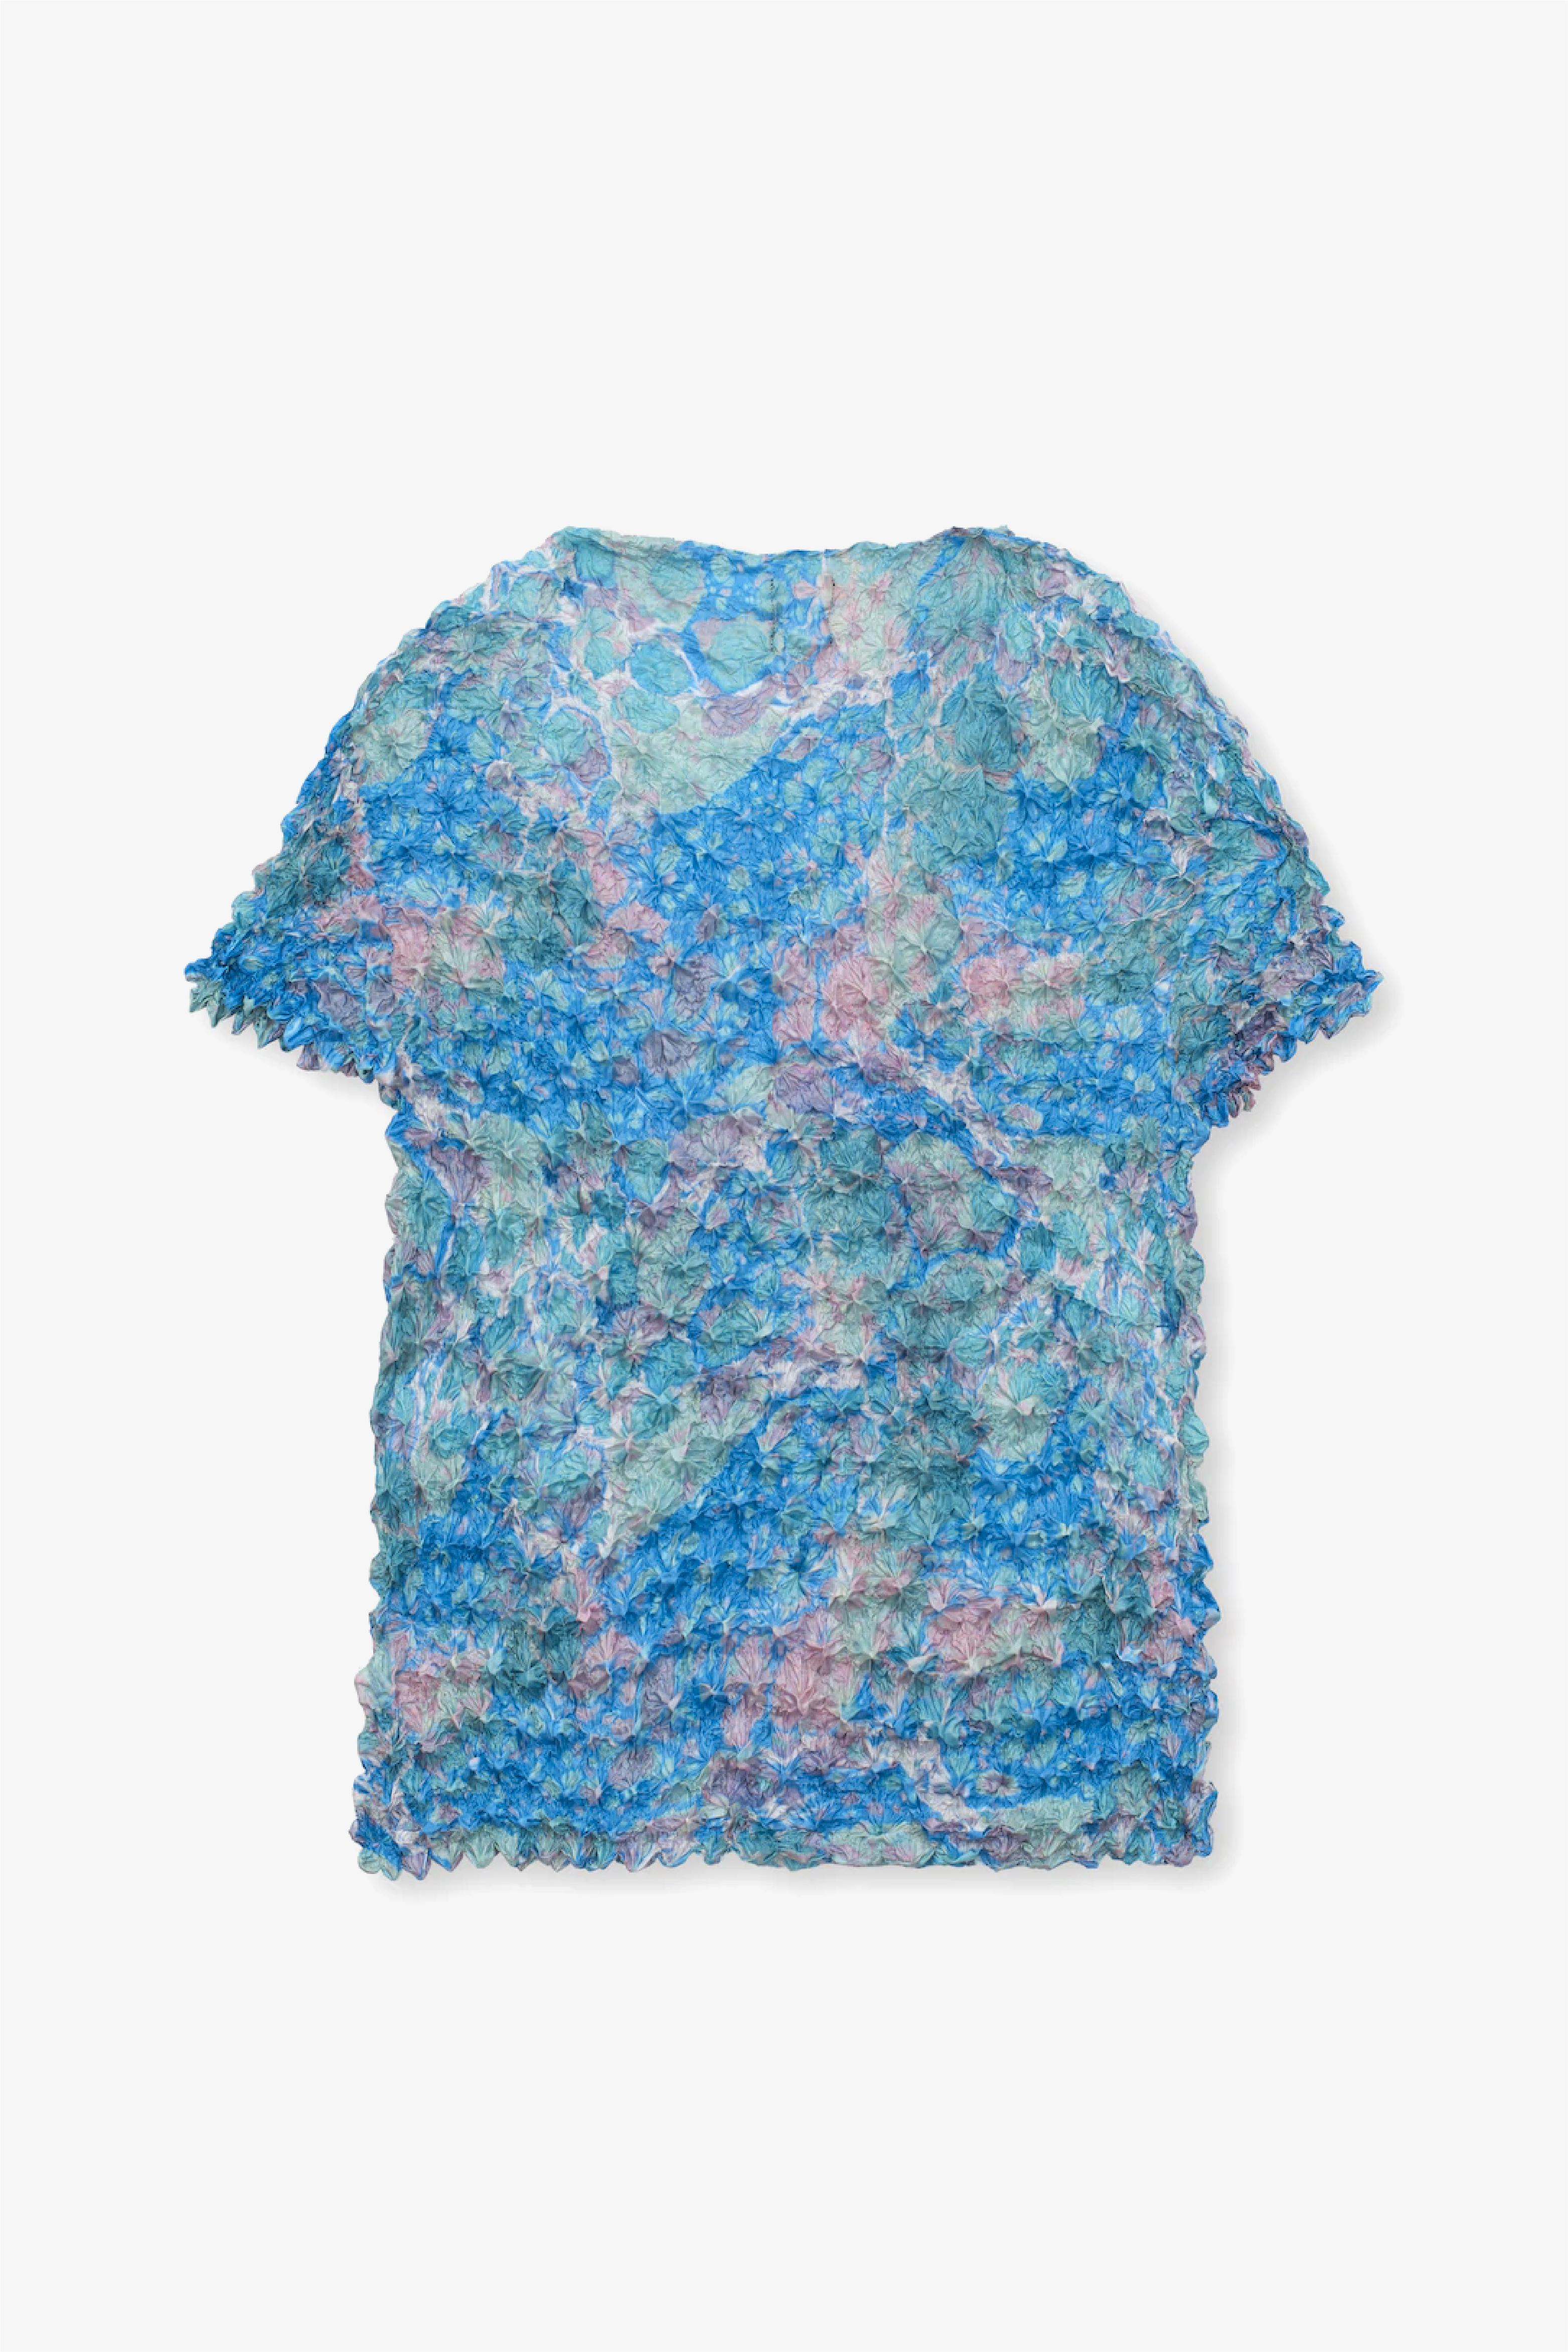 Selectshop FRAME - BRAIN DEAD Marble Bubble Shrink Shirt T-Shirts Dubai